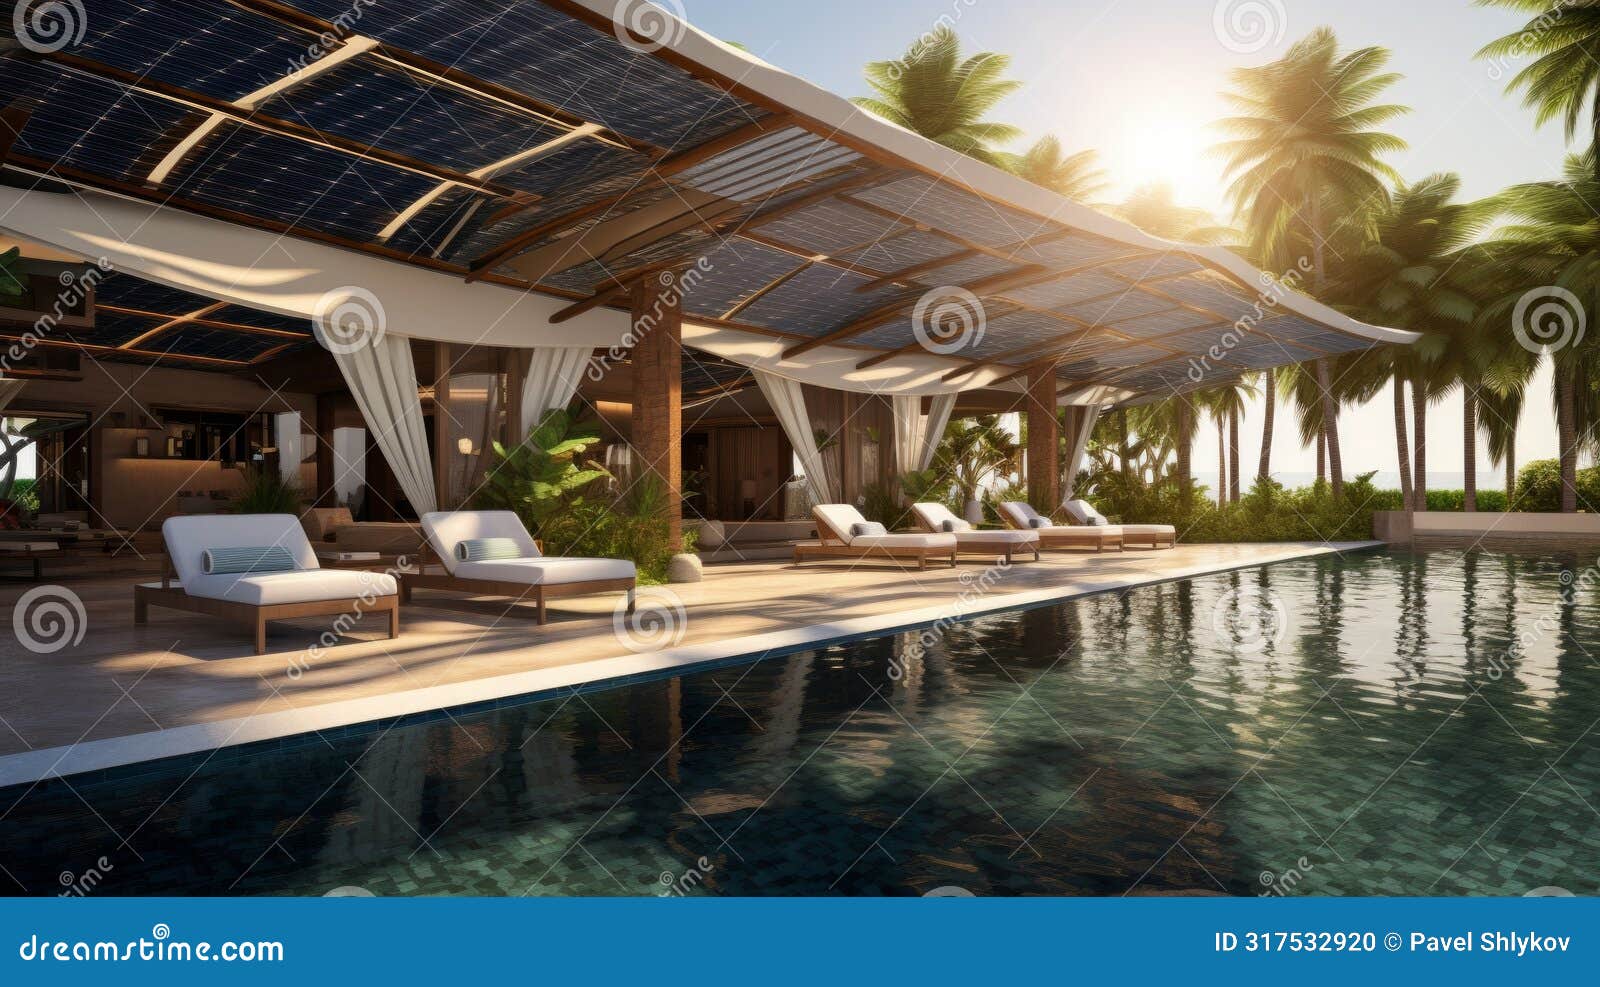 resort sunroof made from solar panels.